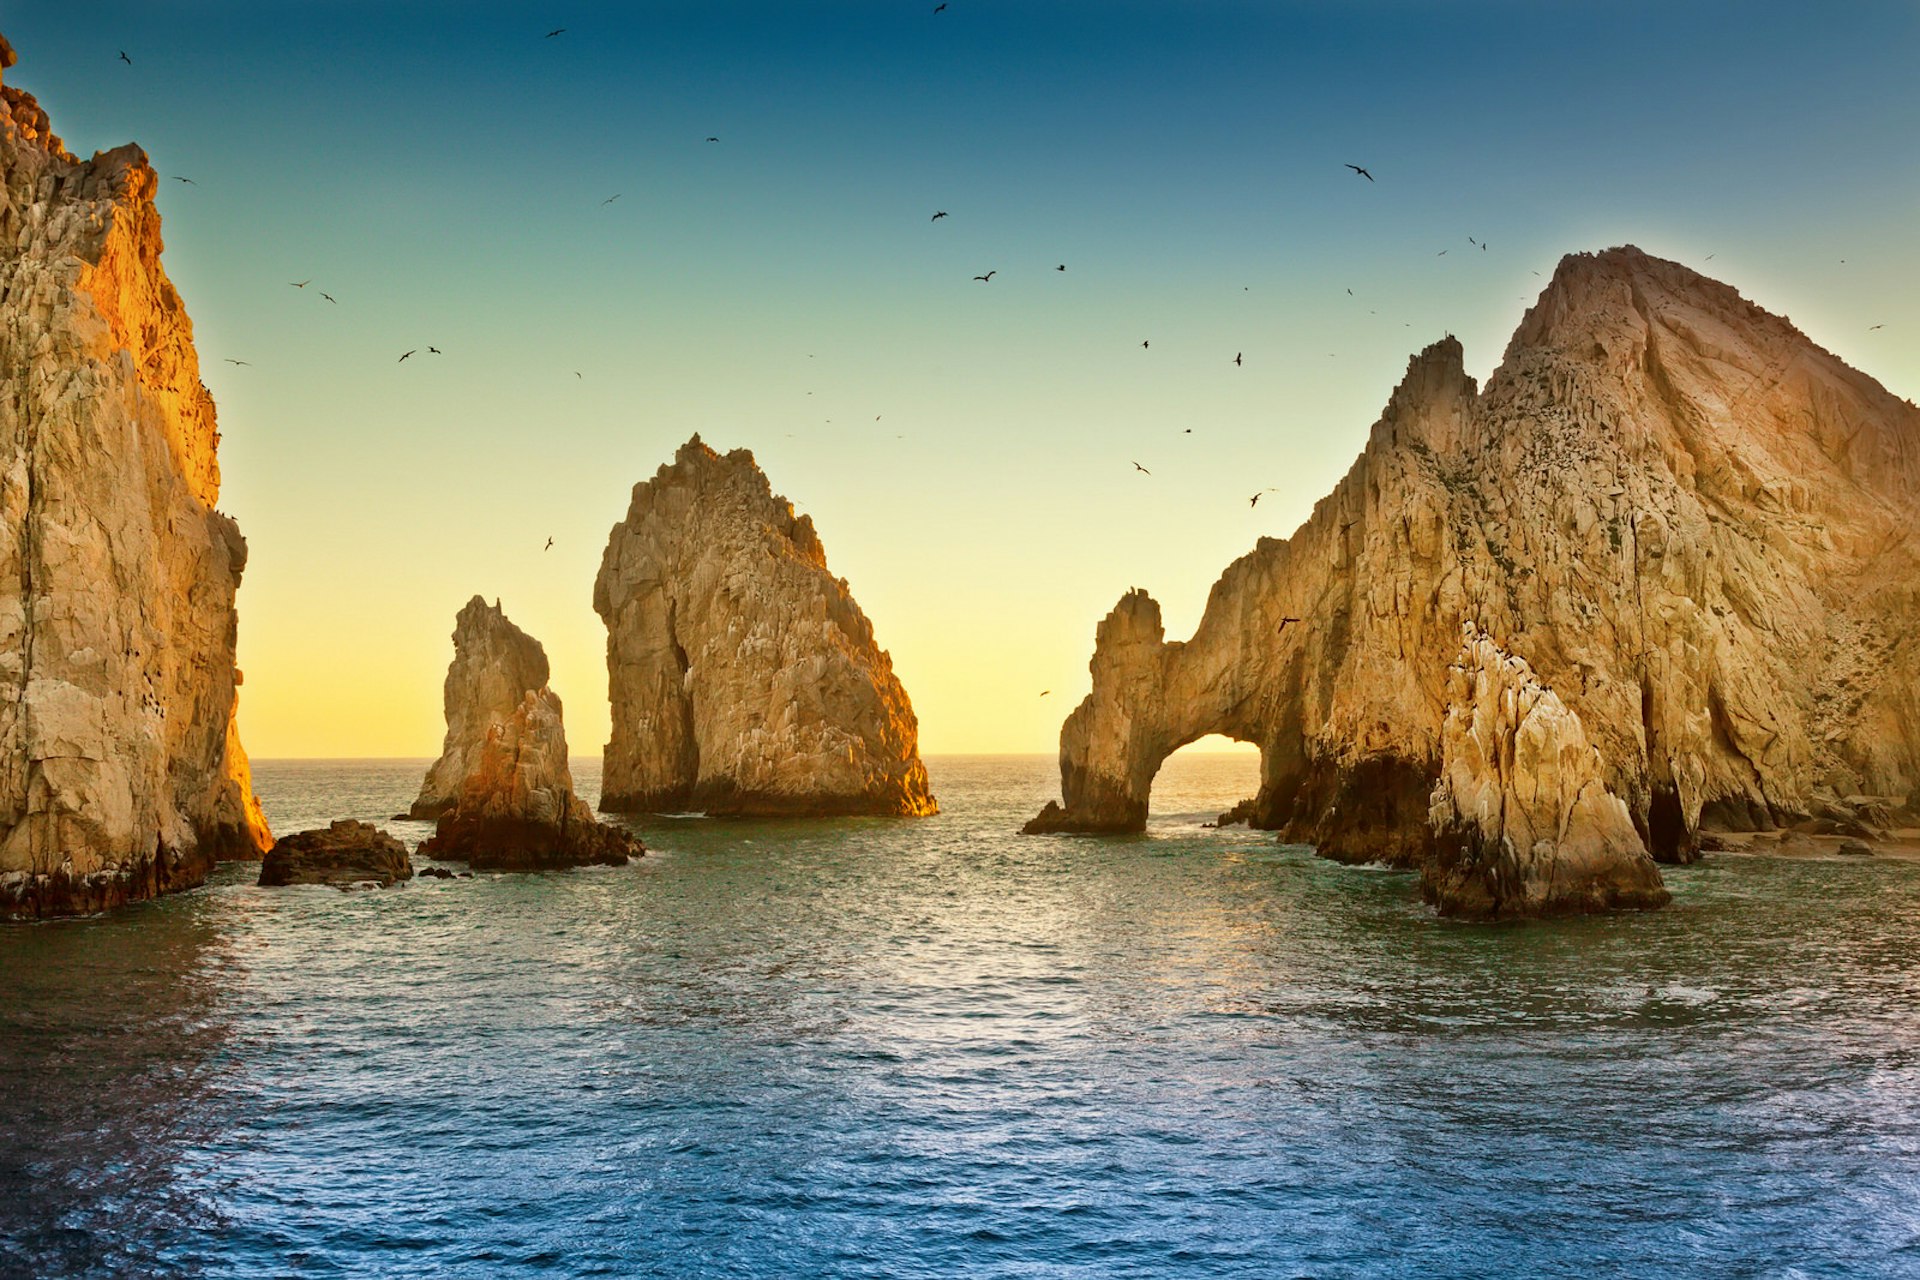 El Arco, Cabo San Lucas, Baja California Sur, Mexico © Ruth Peterkin / Shutterstock